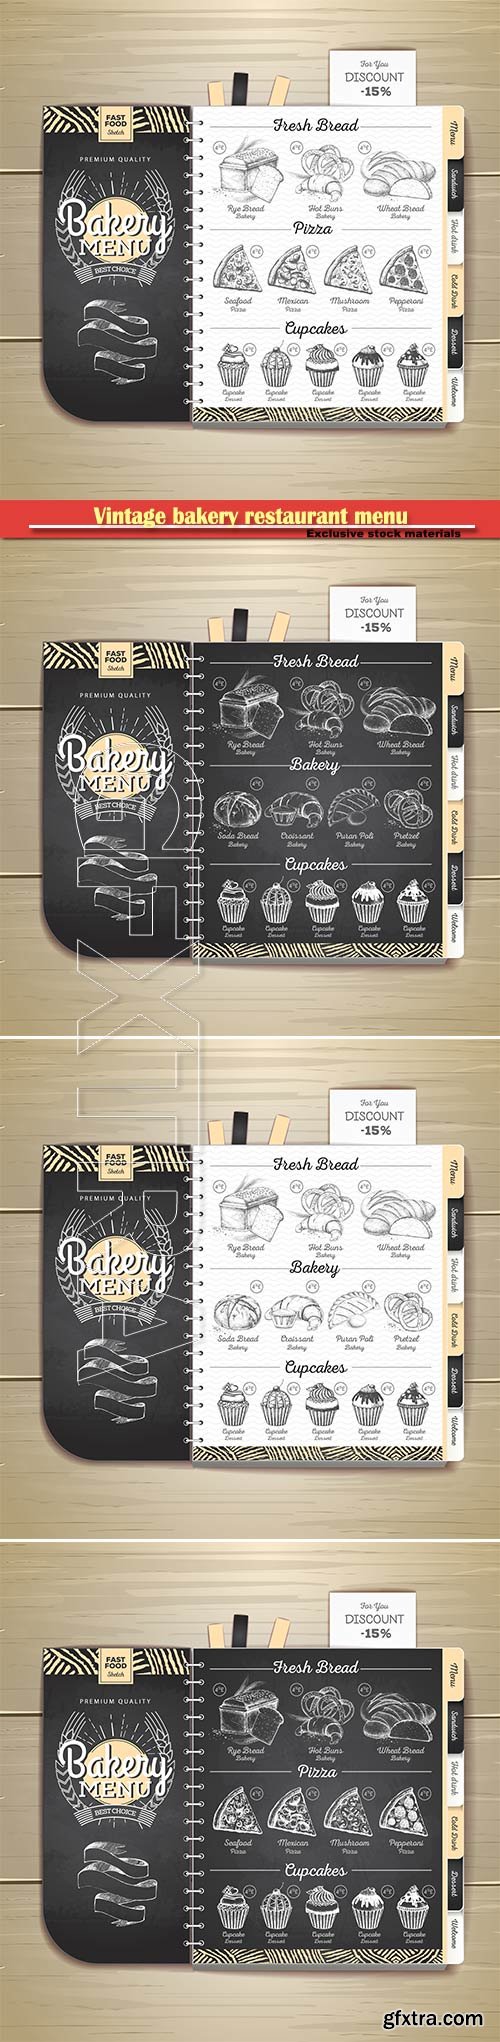 Vintage chalk drawing bakery restaurant menu design vector illustration